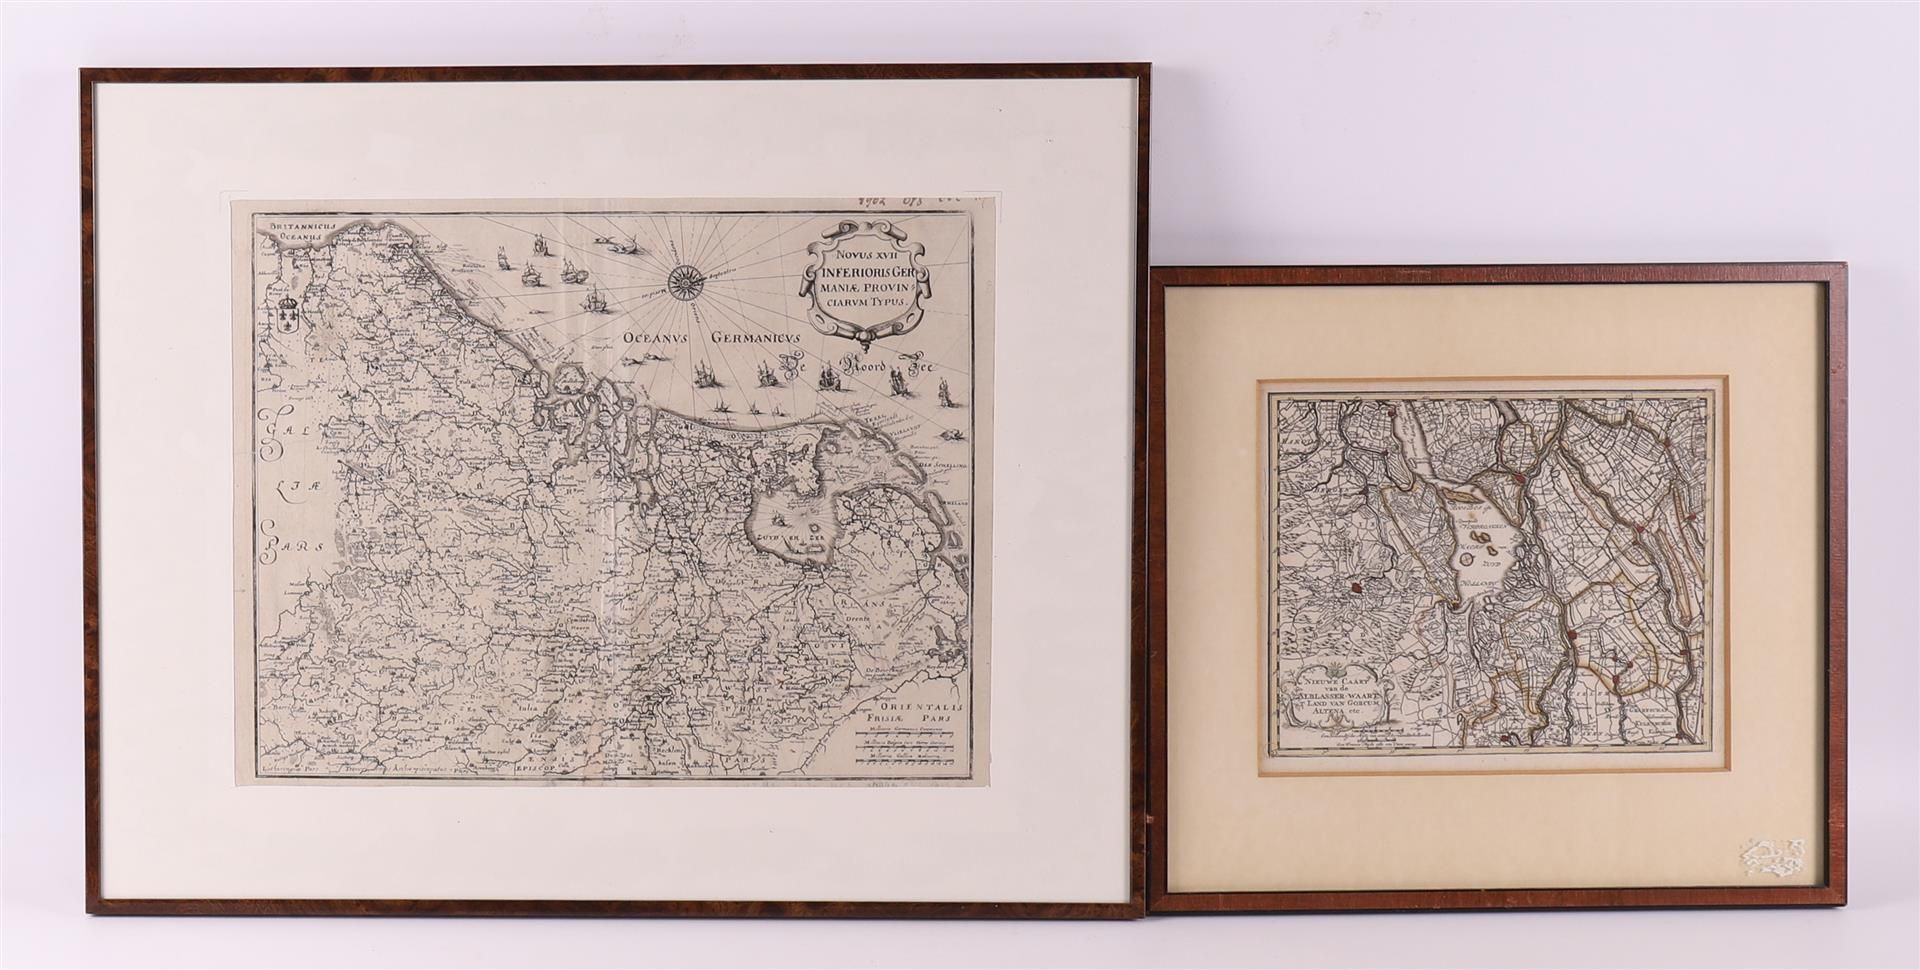 Topography. Novus XVII Inferioris Germaniae(..) Merian. 1659.